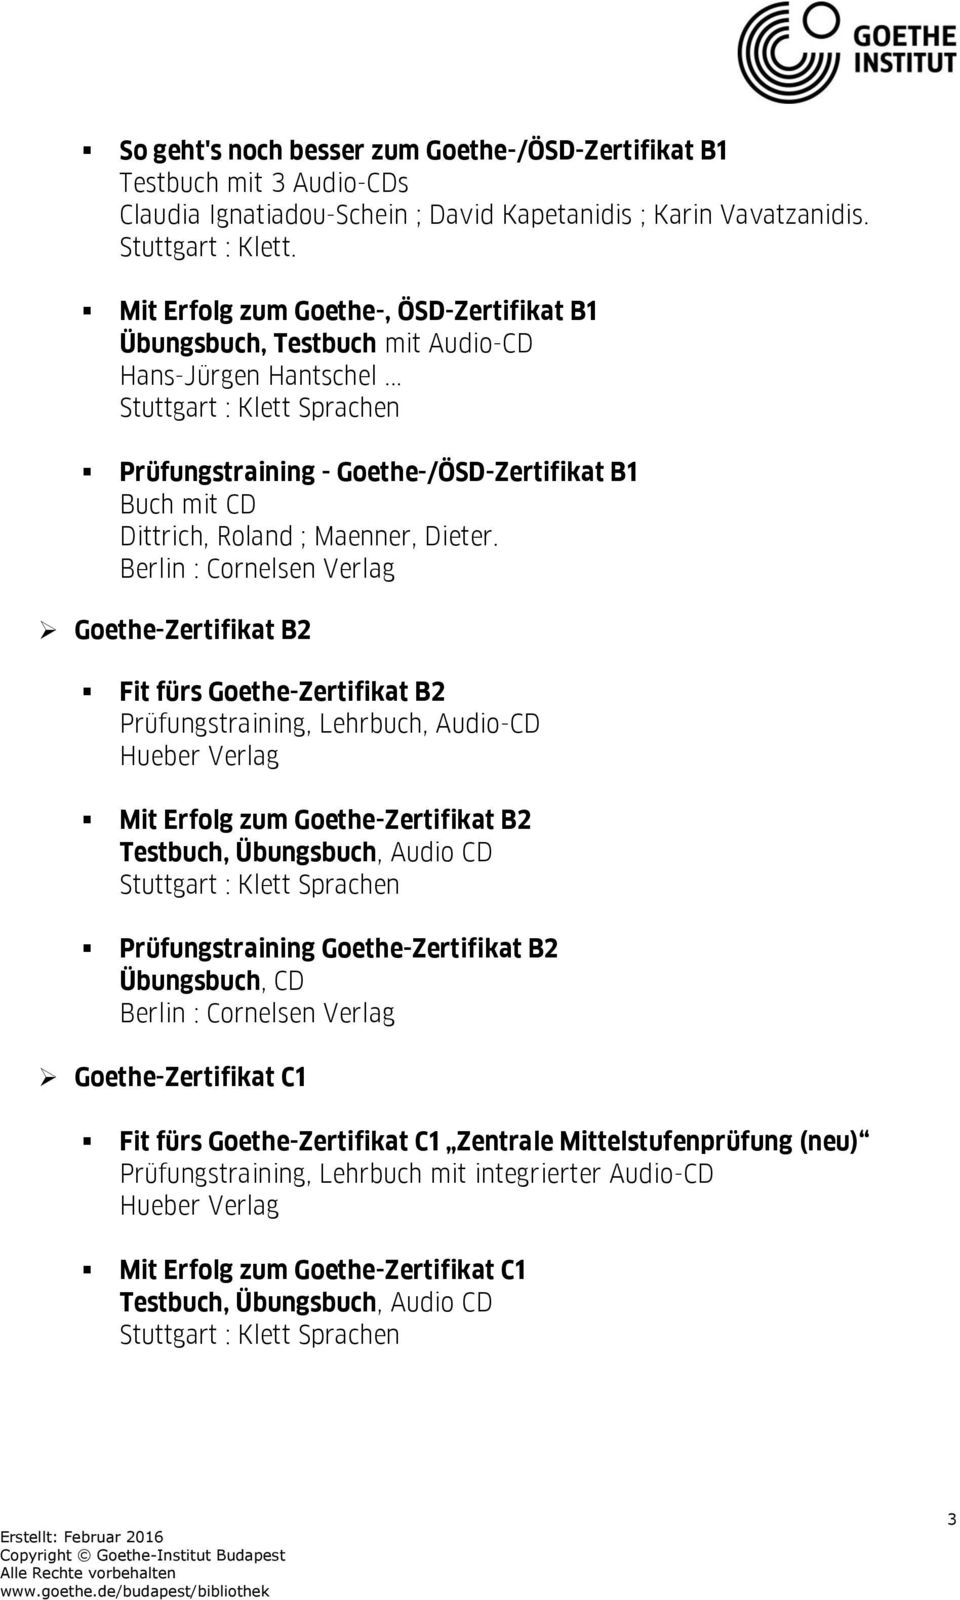 Goethe-Zertifikat B2 Fit fürs Goethe-Zertifikat B2 Prüfungstraining, Lehrbuch, Audio-CD Mit Erfolg zum Goethe-Zertifikat B2 Testbuch, Übungsbuch, Audio CD Prüfungstraining Goethe-Zertifikat B2